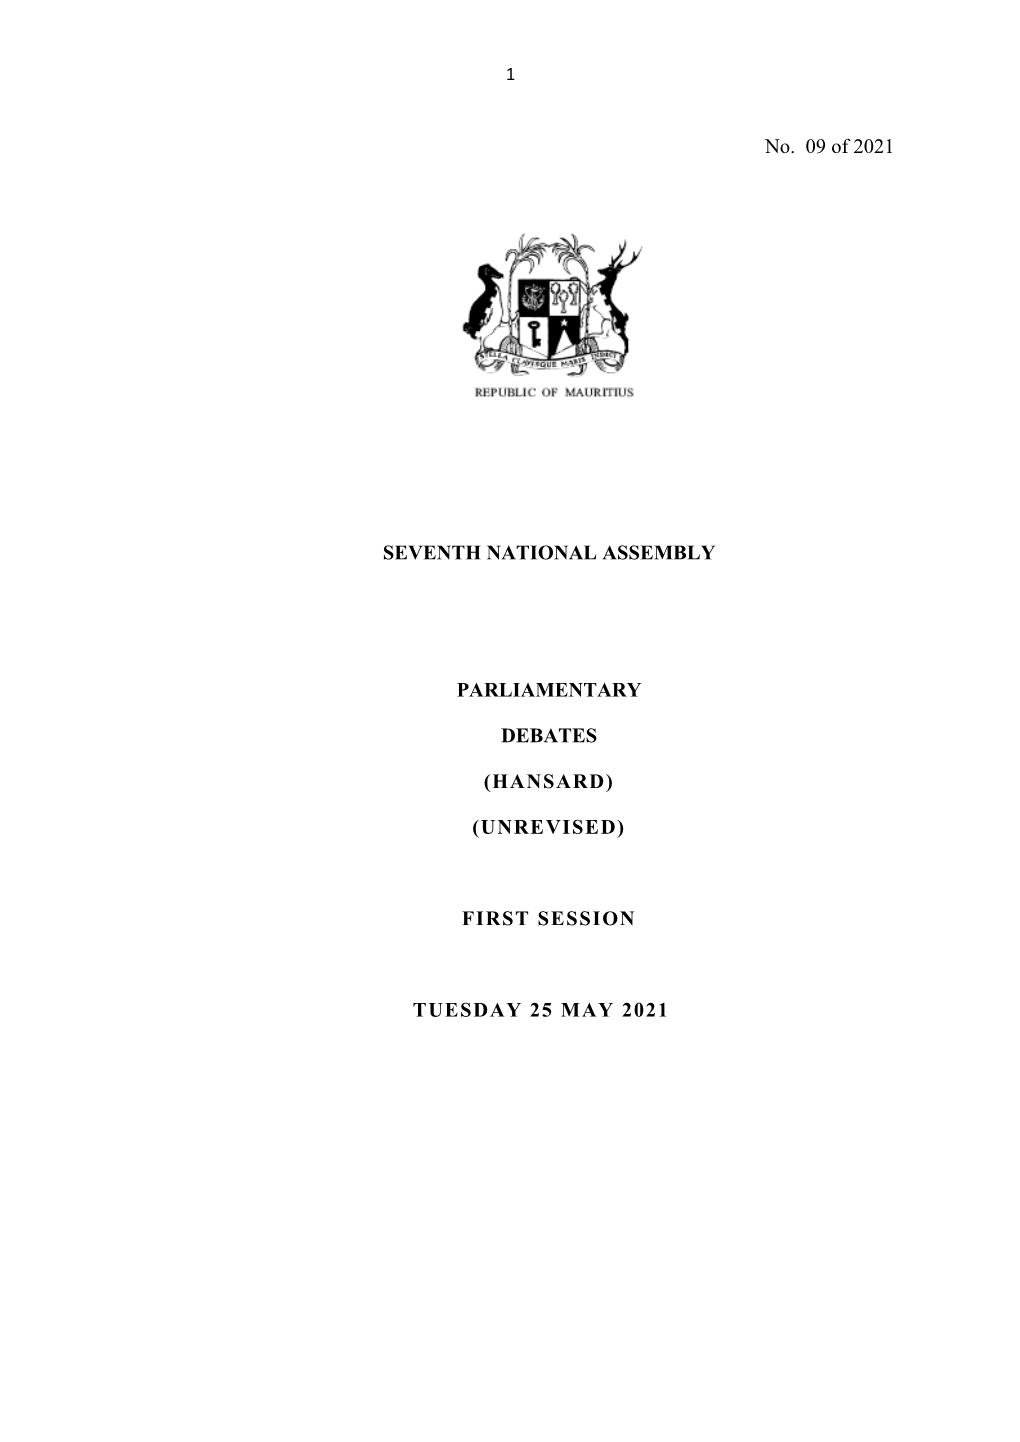 No. 09 of 2021 SEVENTH NATIONAL ASSEMBLY PARLIAMENTARY DEBATES